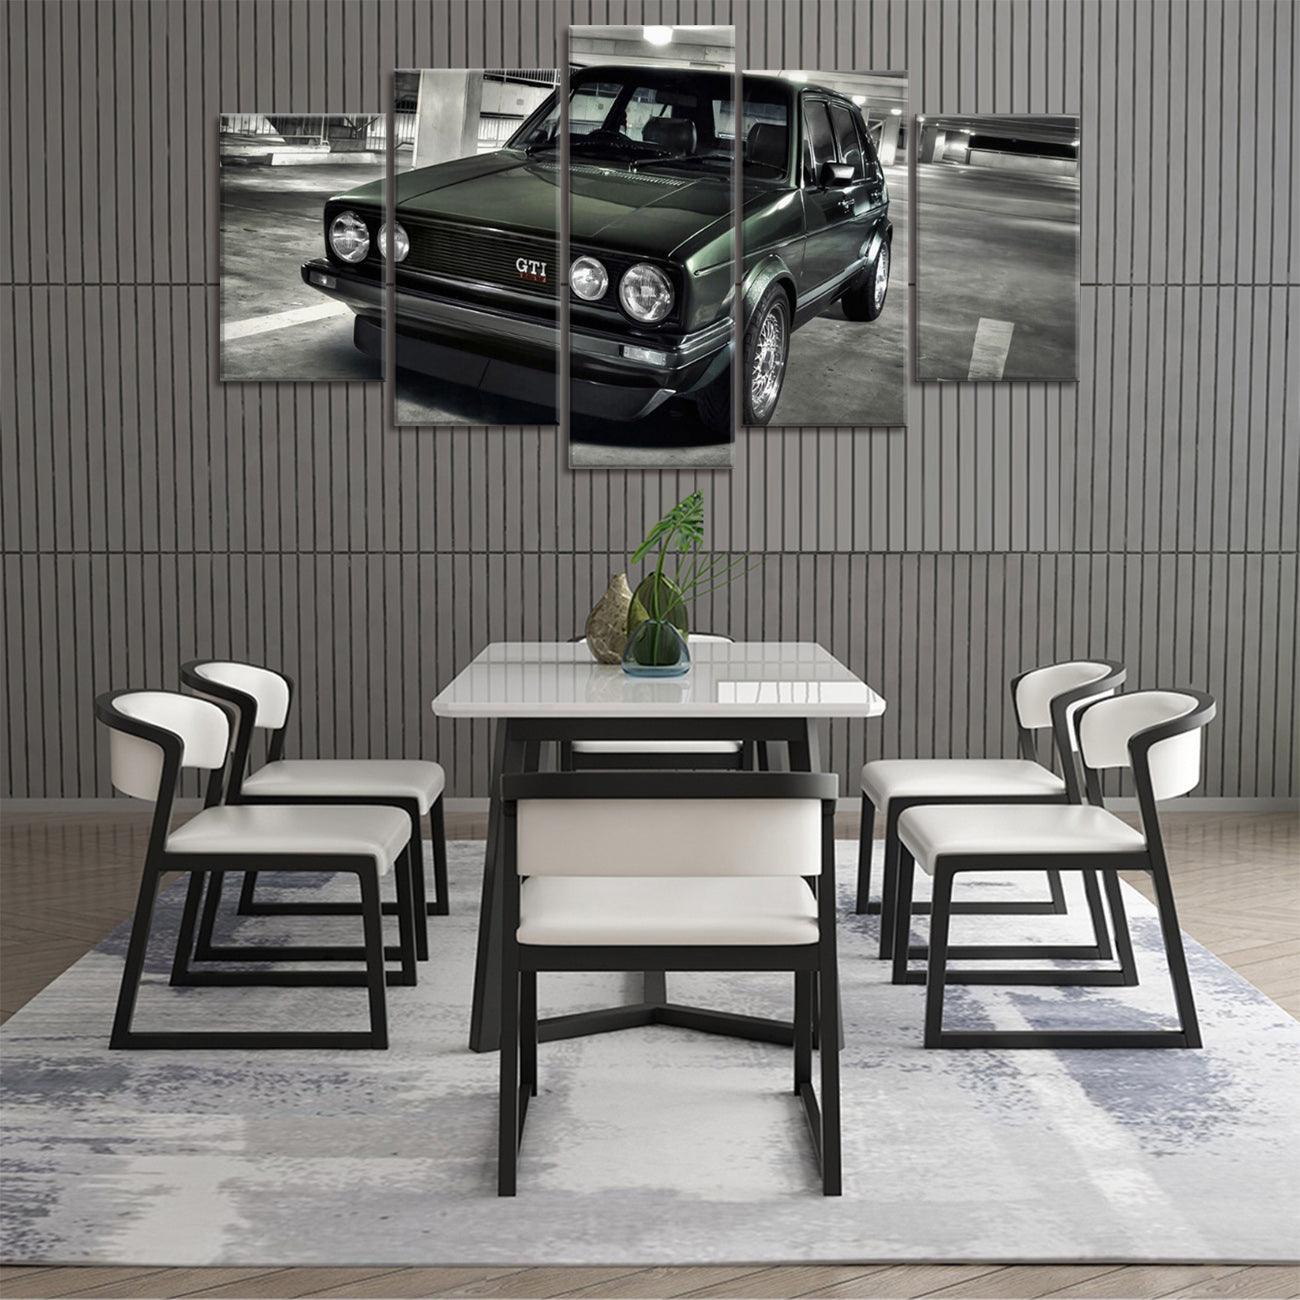 Volkswagen Golf GTI 5 Panel Canvas Print Wall Art - GotItHere.com